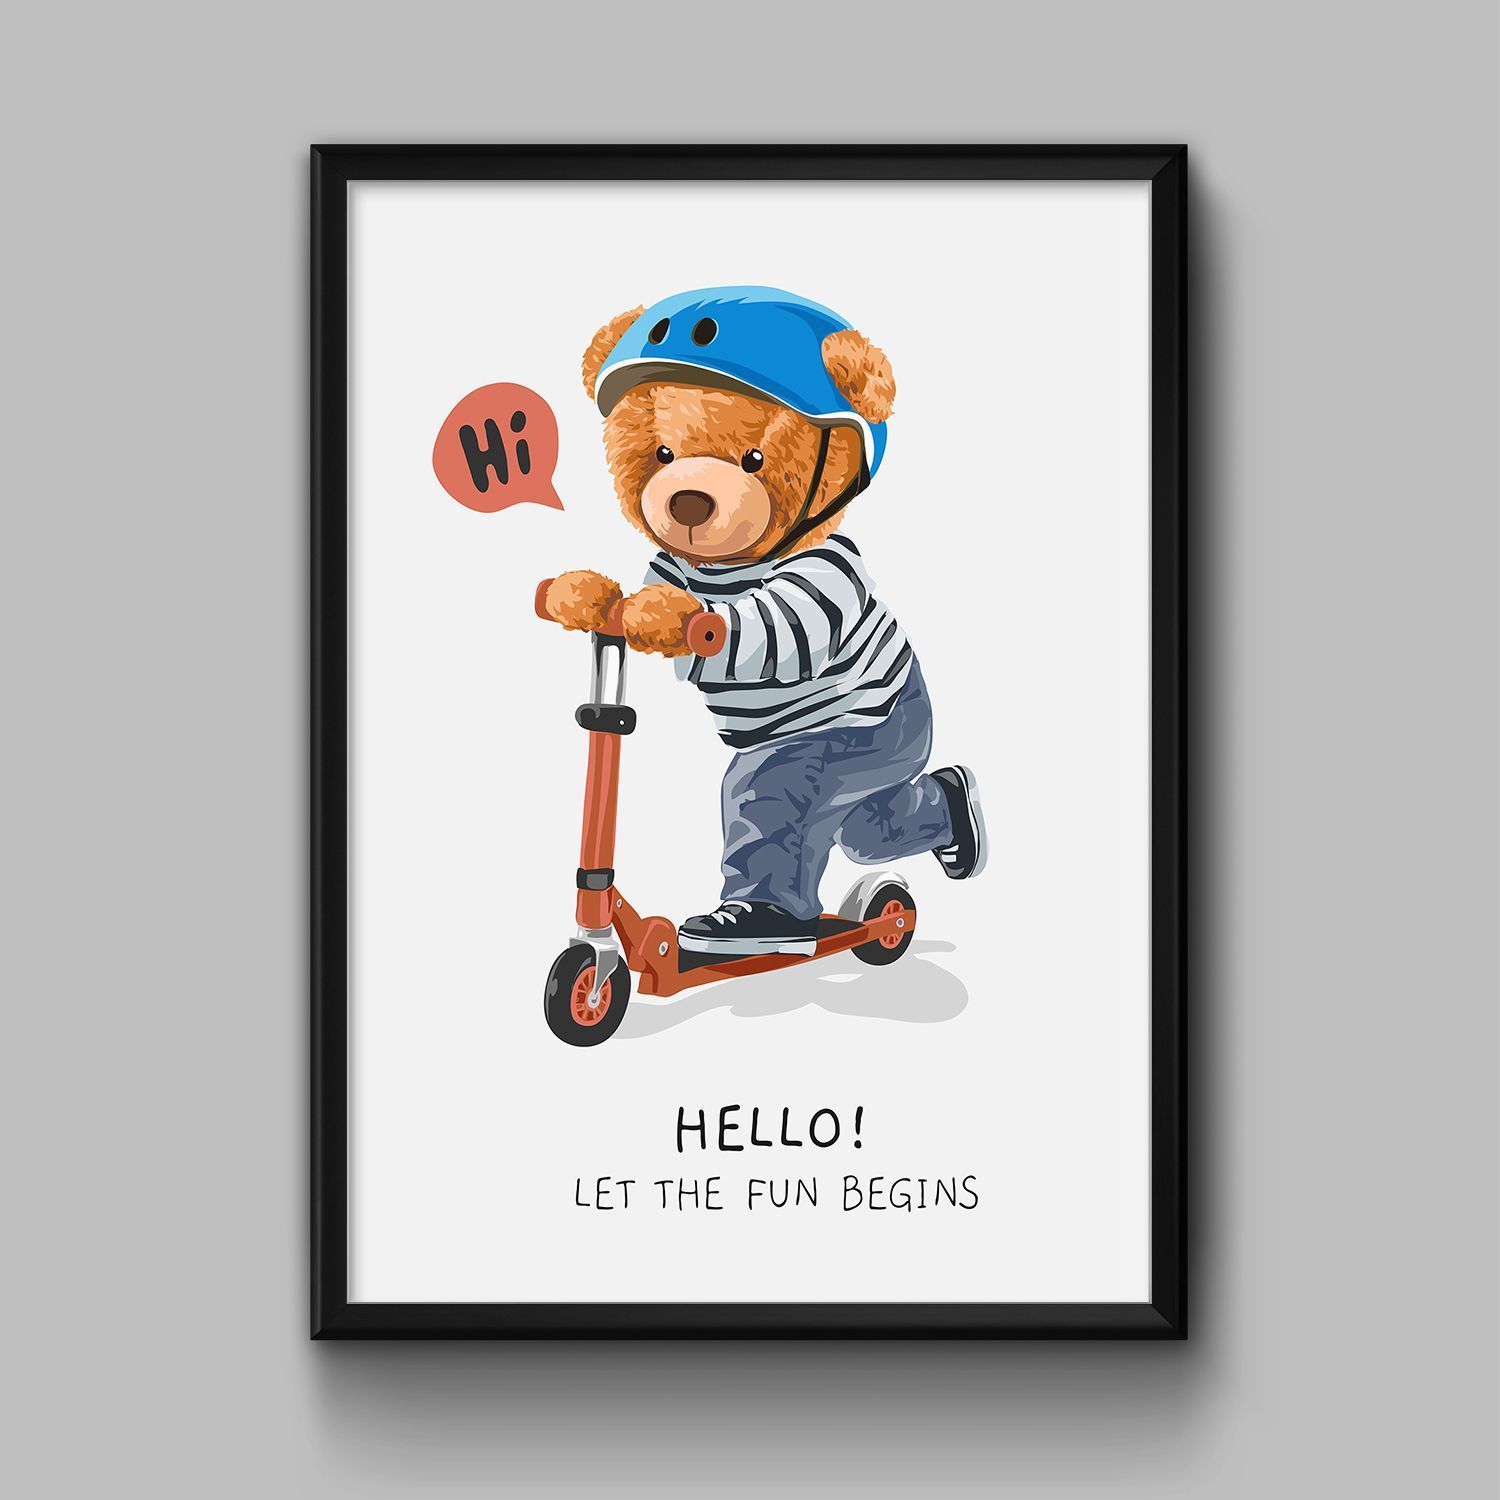 Постер "Let the fun begins" от Интернет магазина Милота